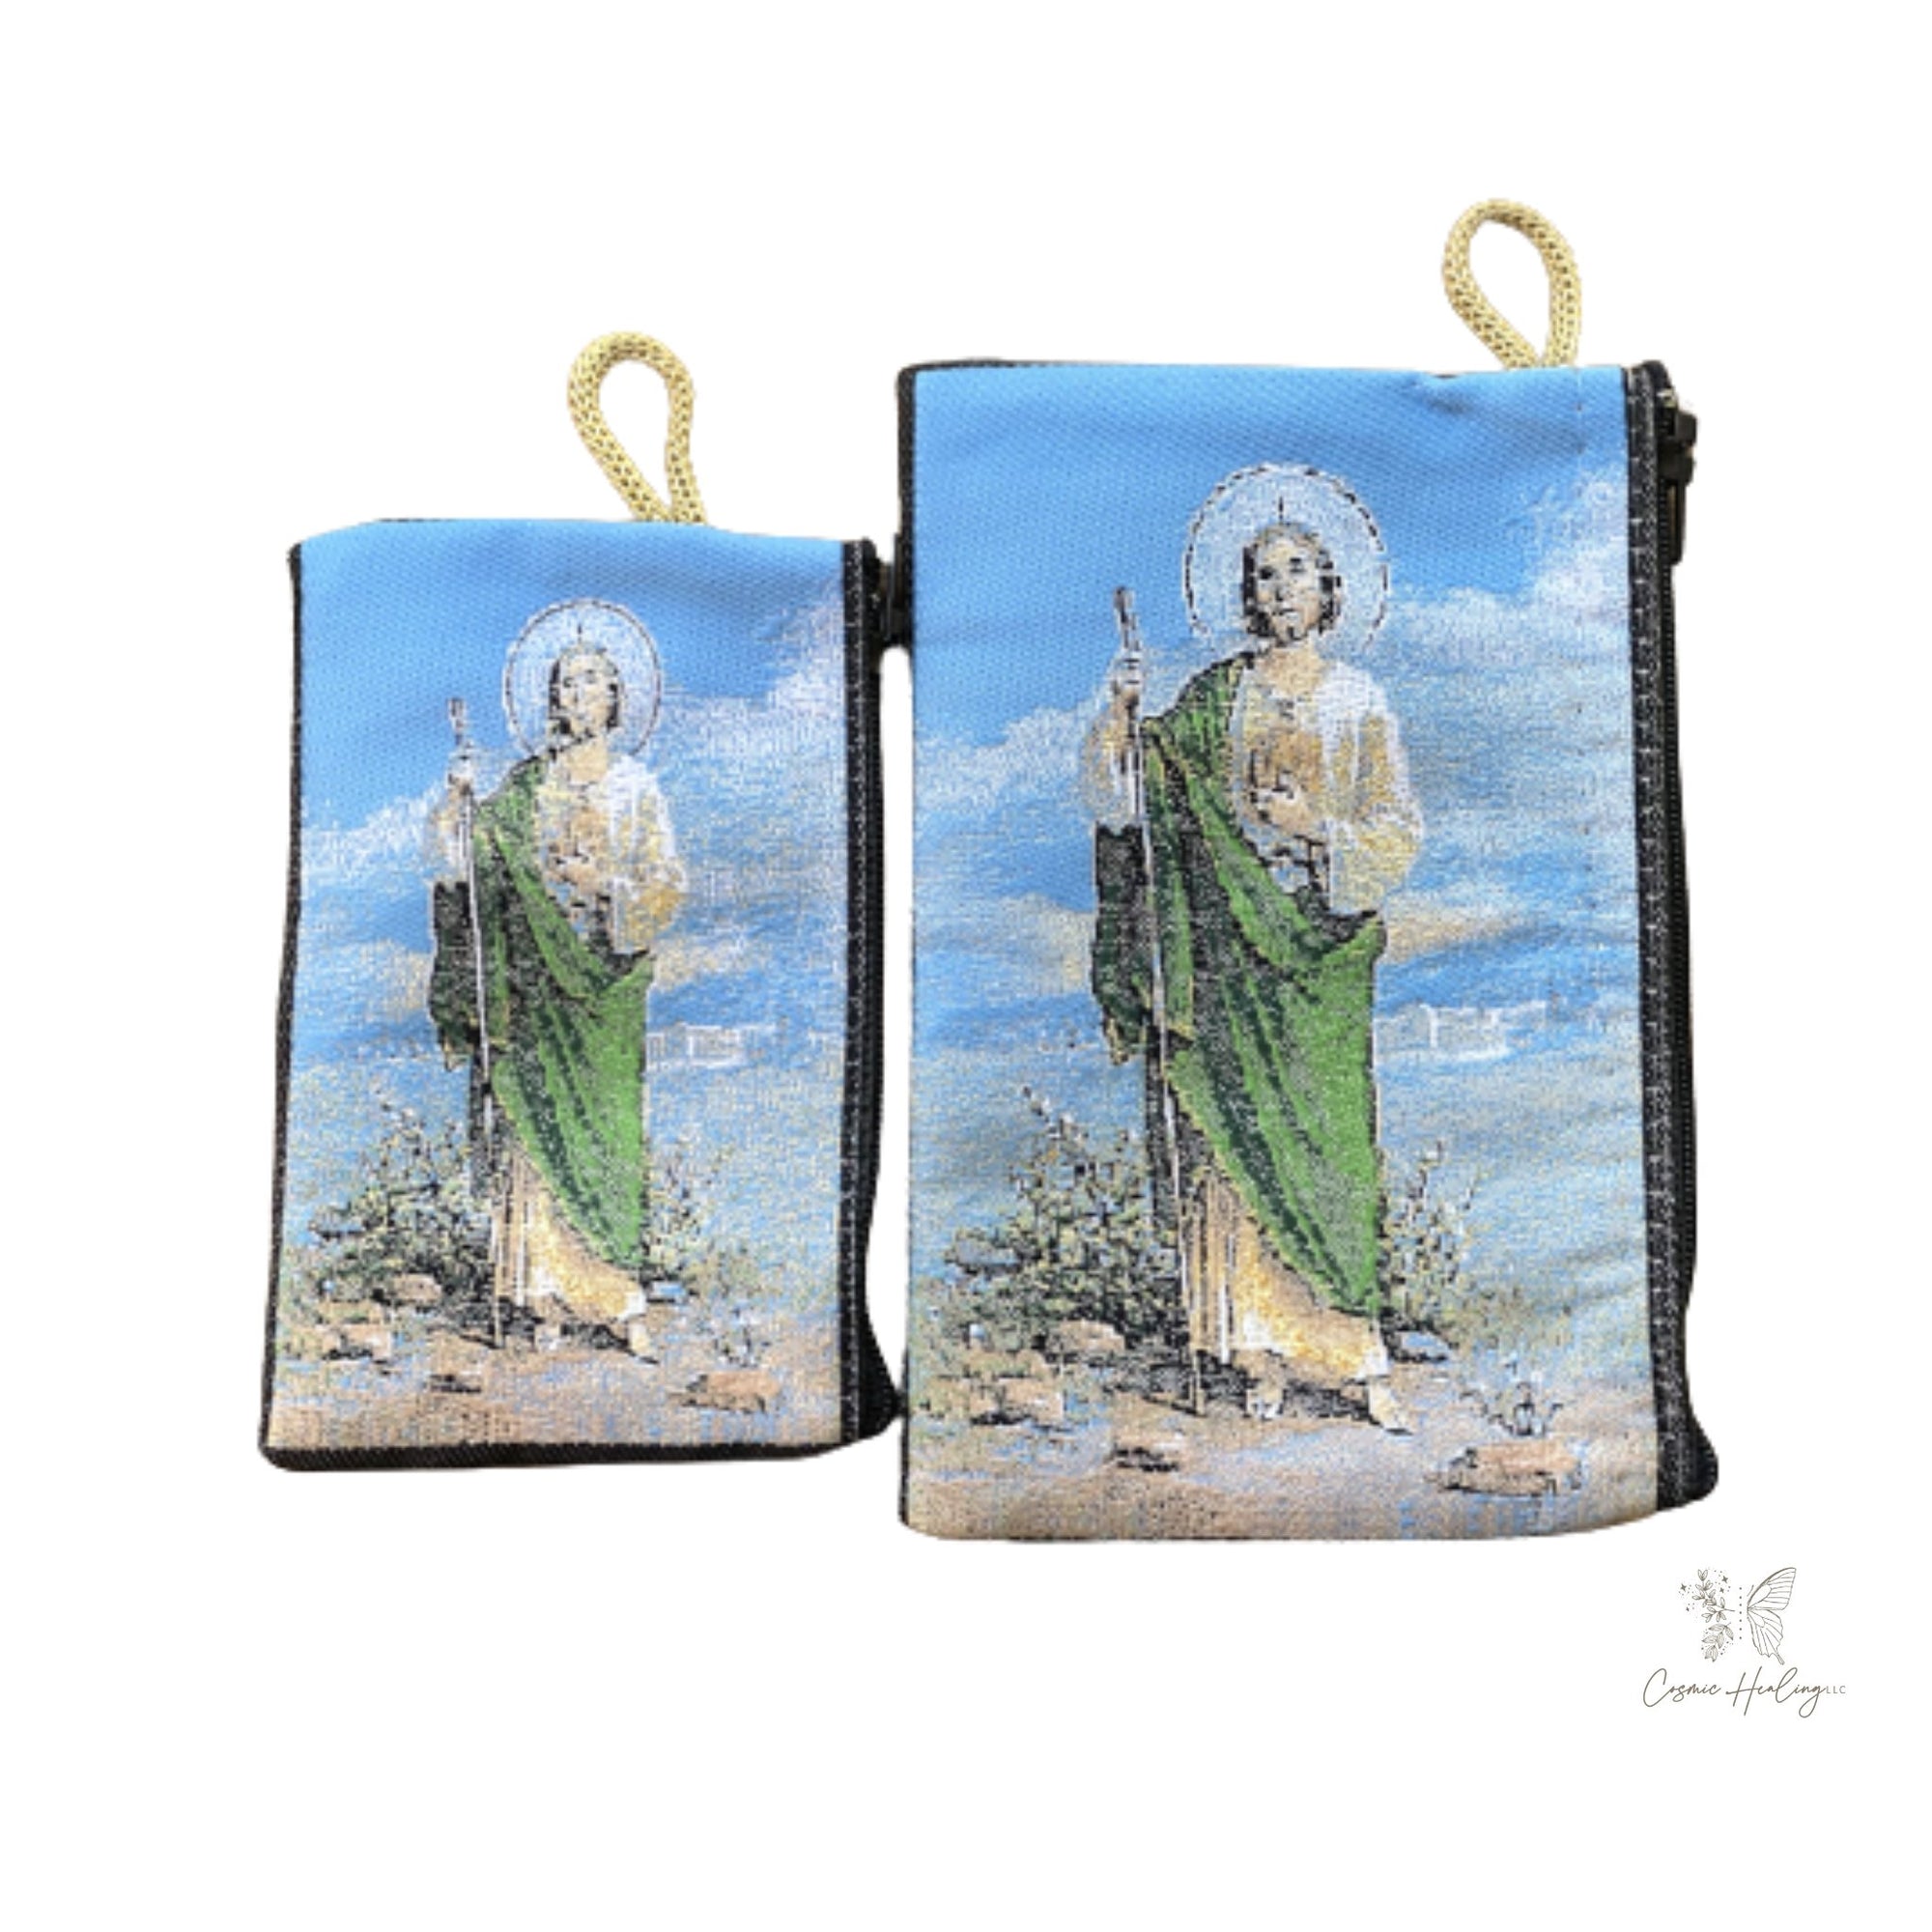 Woven San Judas Tadeo Tapestry Rosary Bag - Shop Cosmic Healing